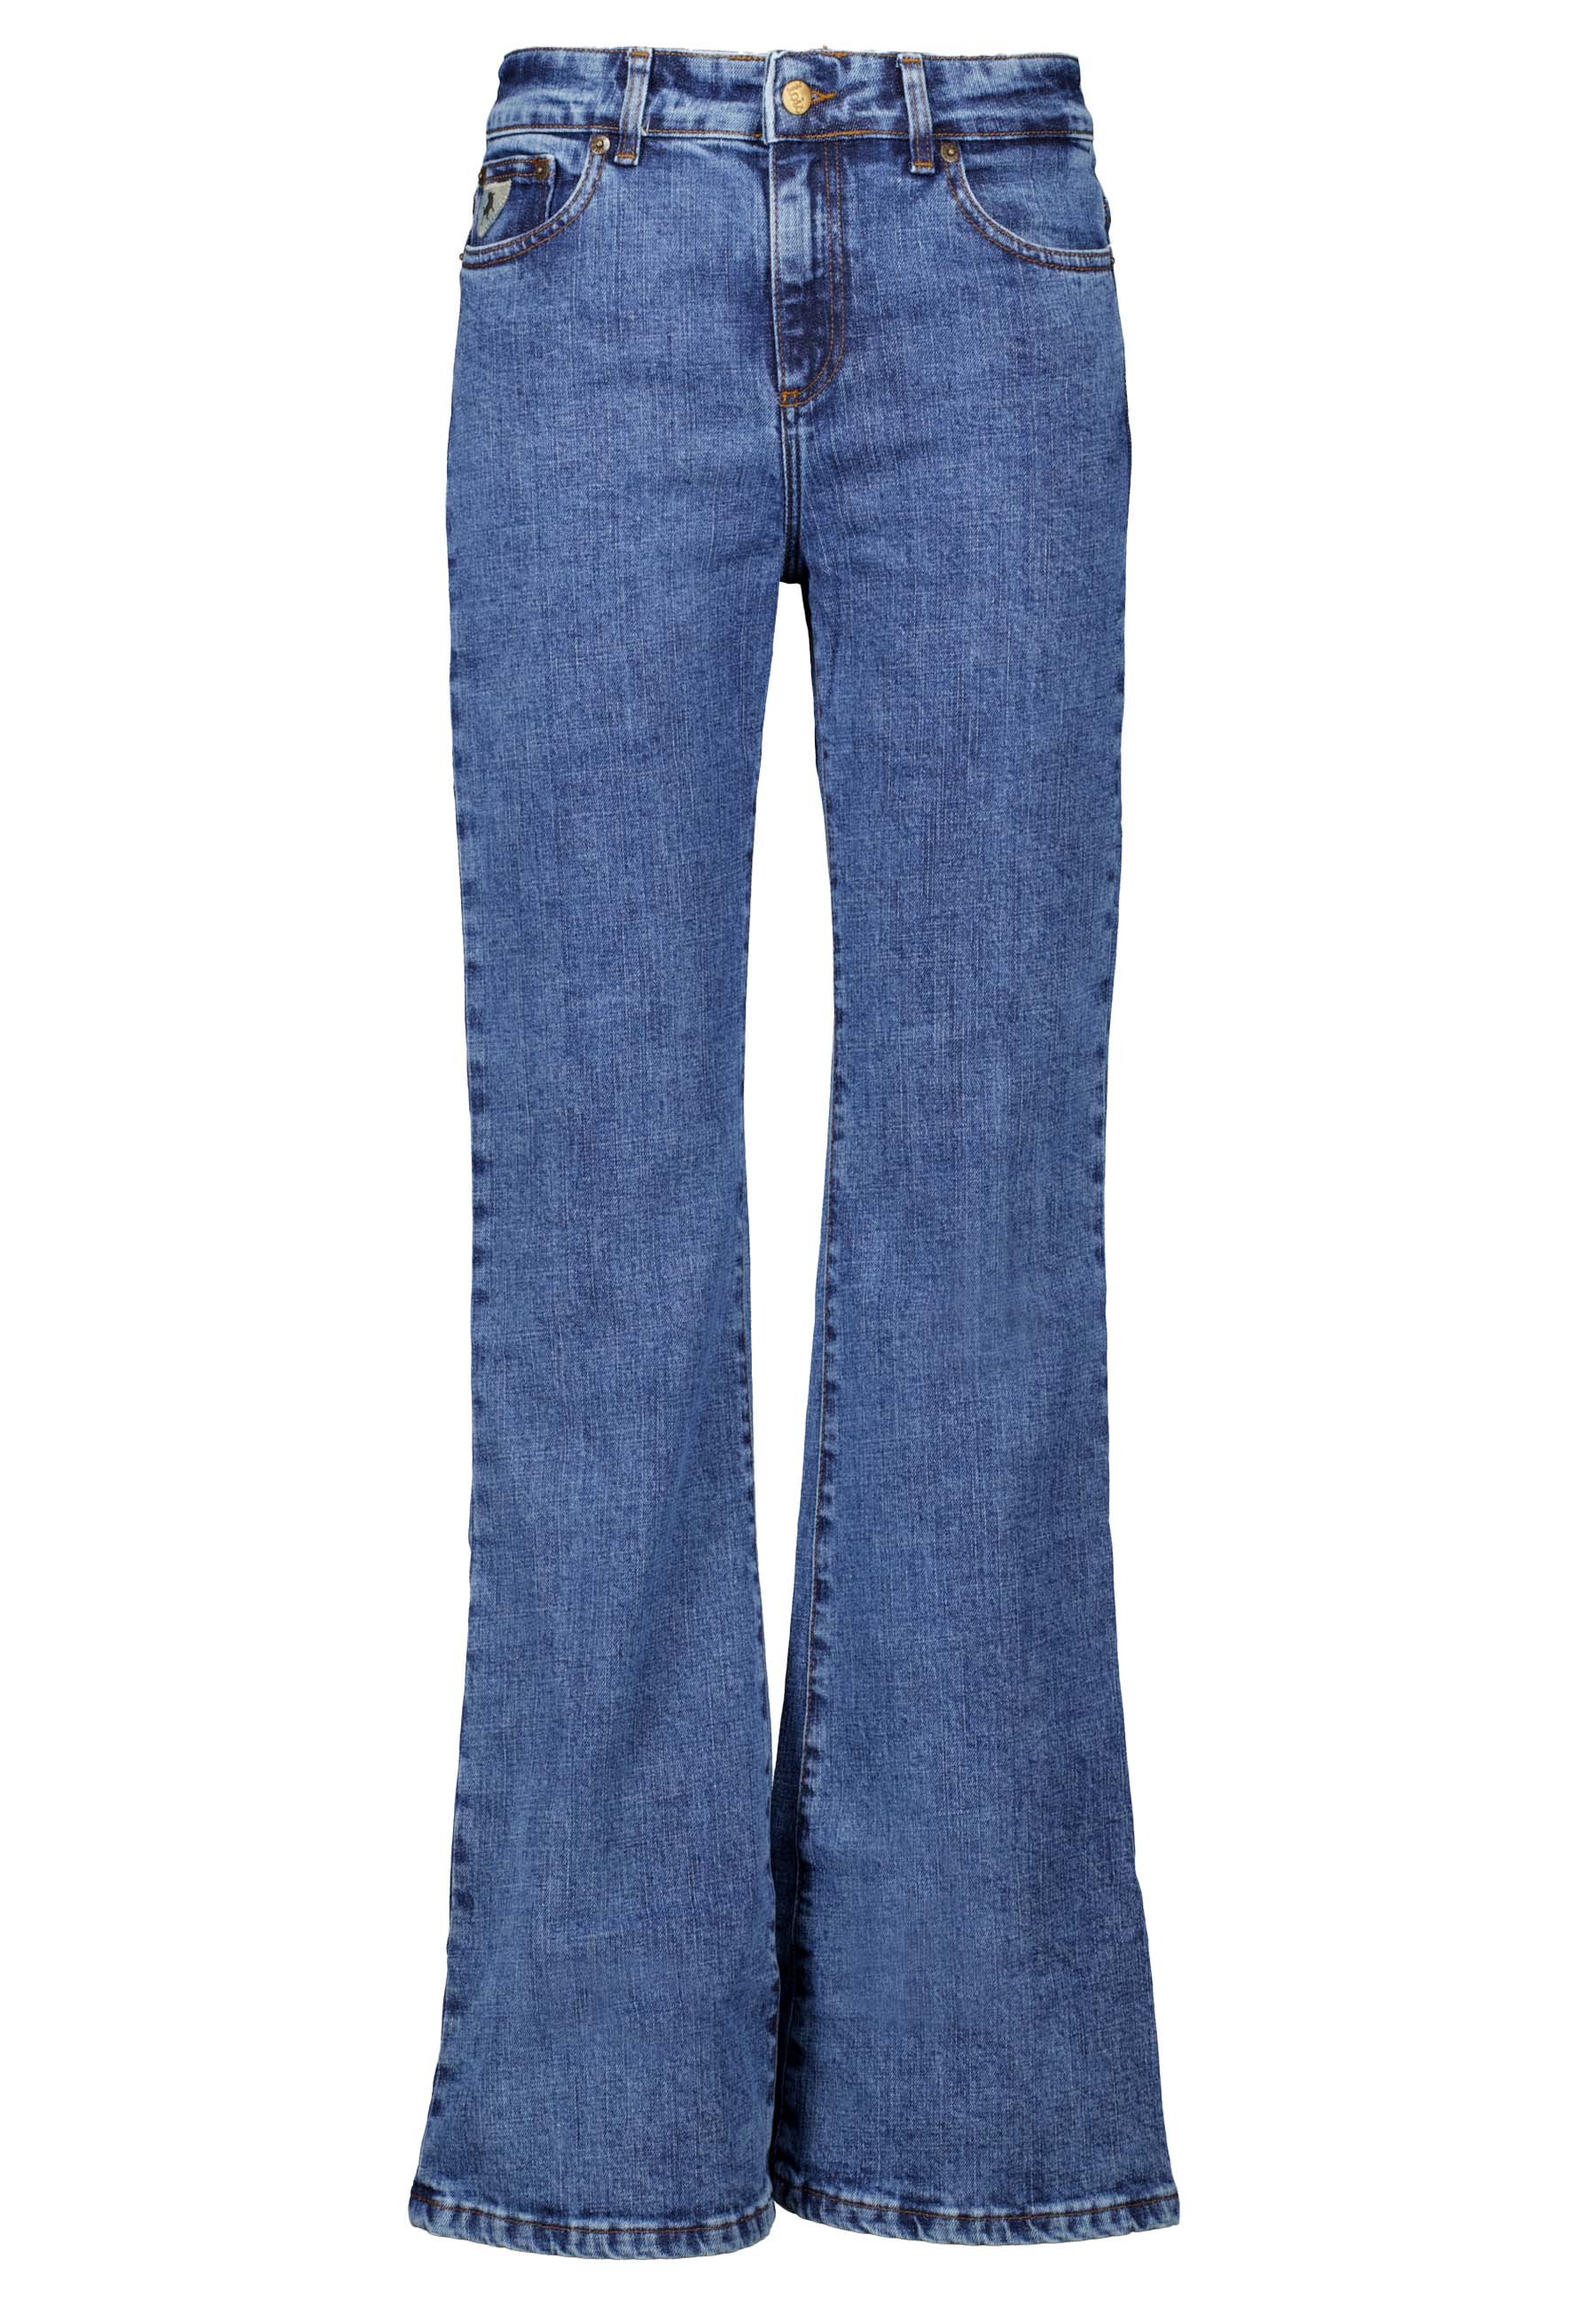 Lois Raval comfy jeans blauw Dames maat 28/34